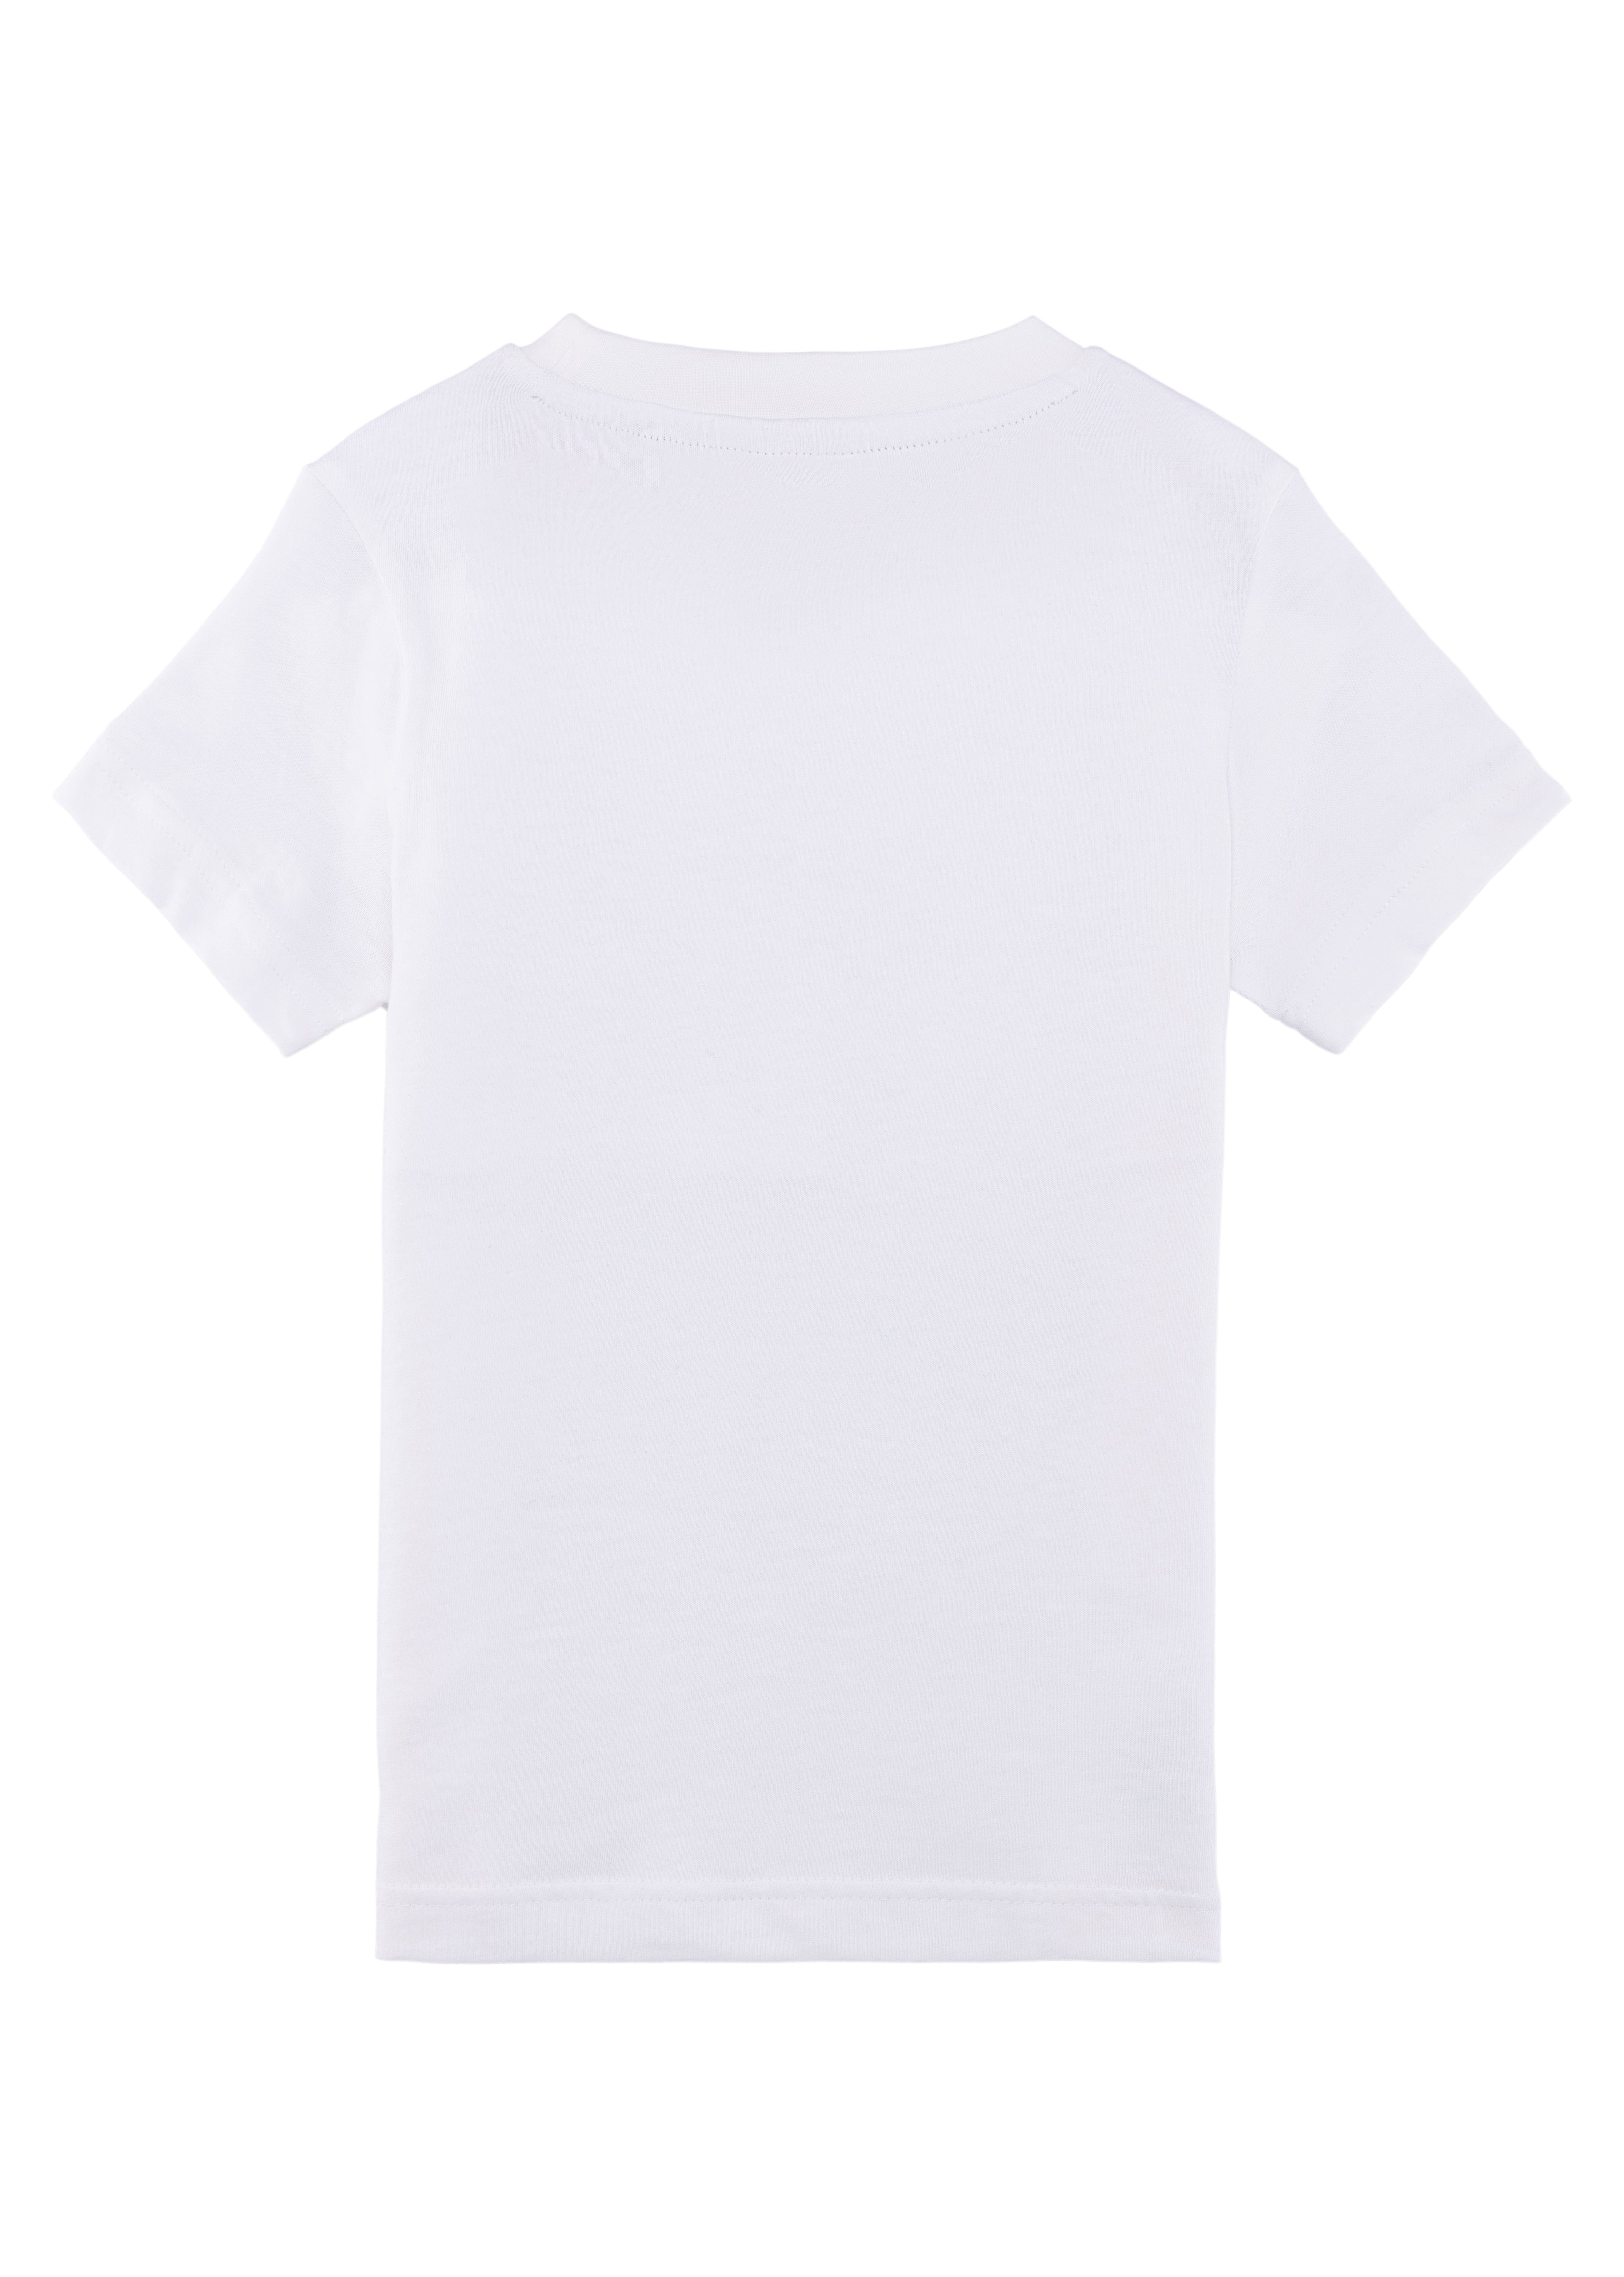 Brusthöhe Lacoste-Krokodil Lacoste auf WHITE mit T-Shirt